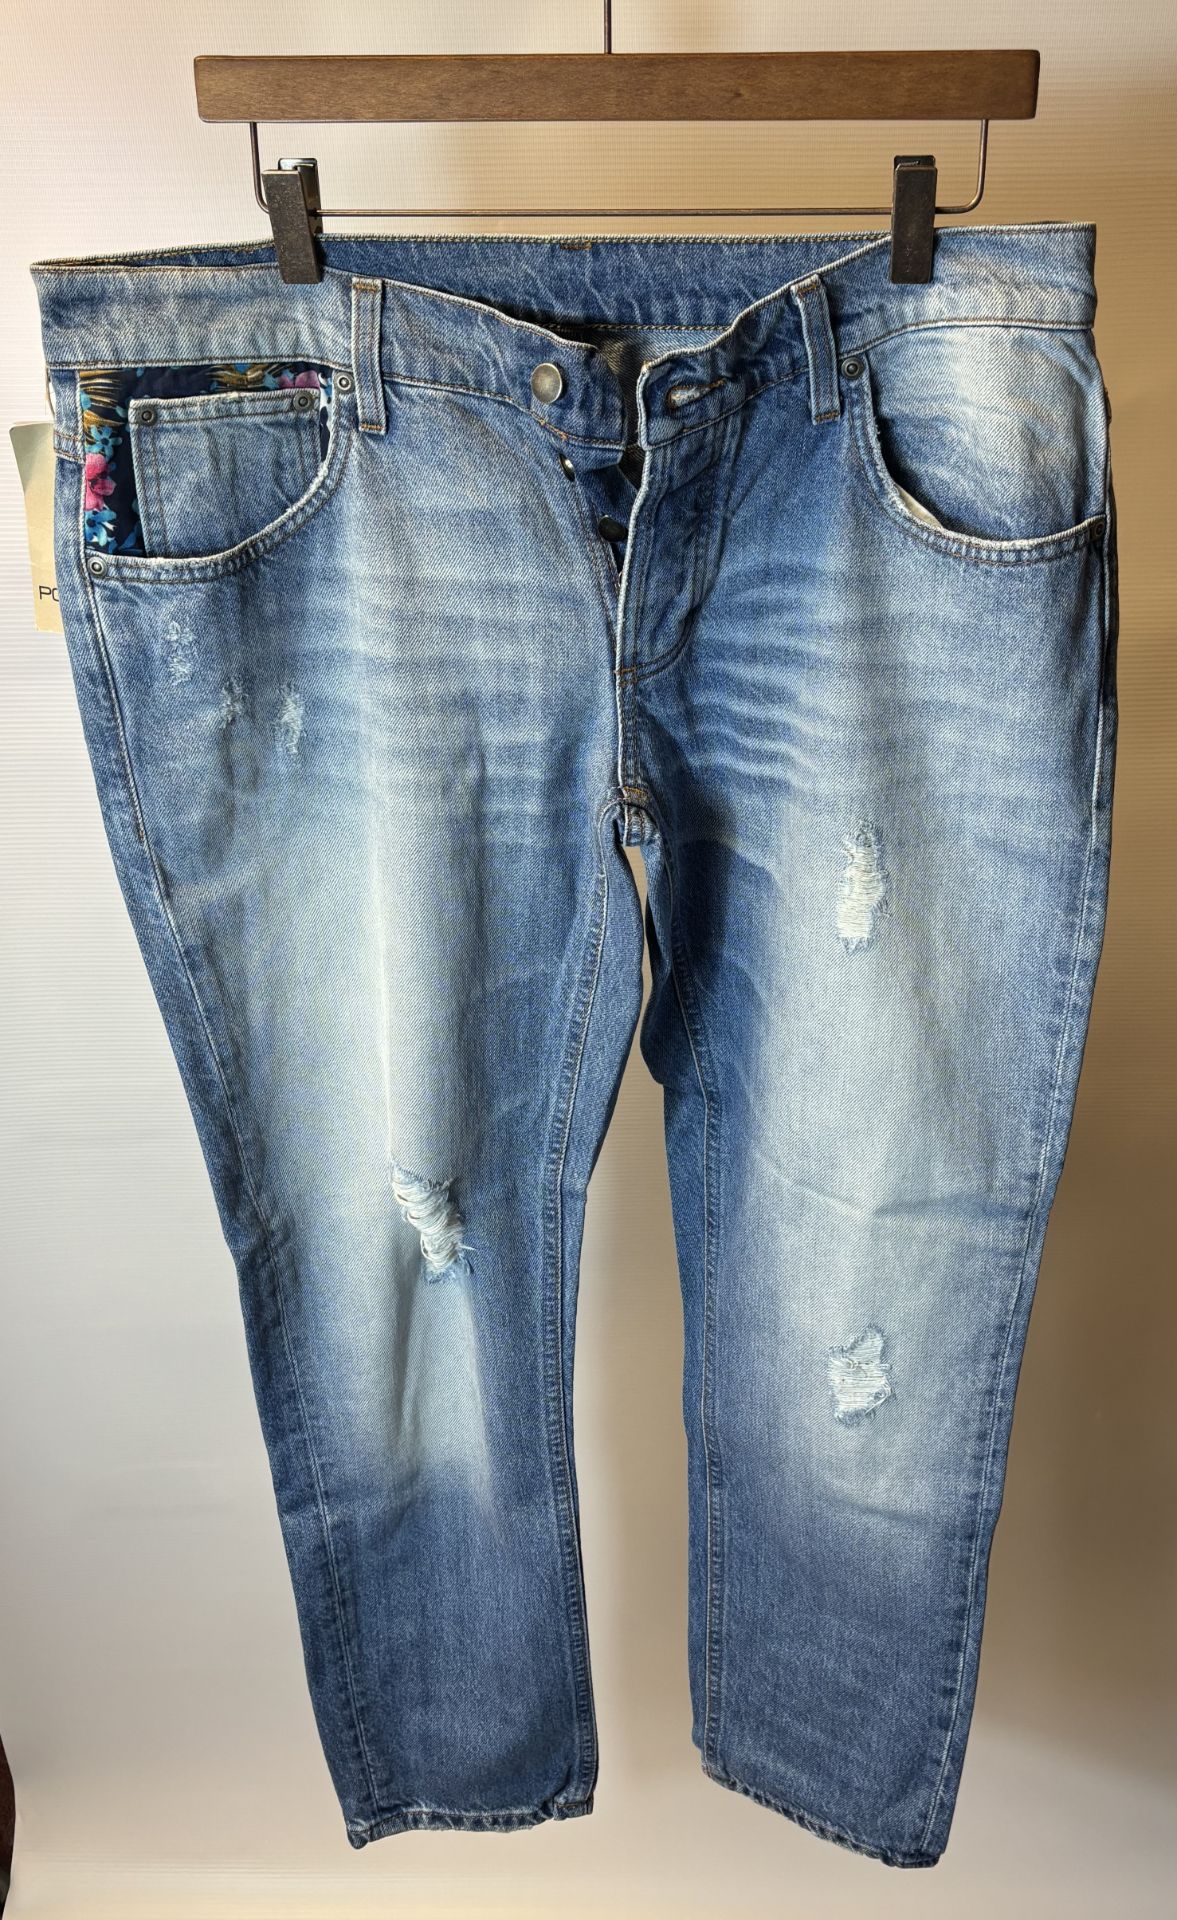 10 x Pairs Of Various Women's Jeans / Pants As Seen In Photos - Bild 13 aus 30